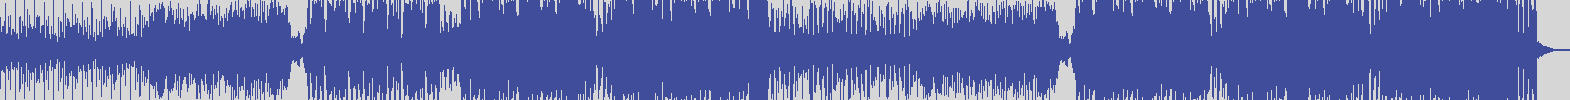 suxess [SX031] Dyson Kellerman - On the Floor [] audio wave form